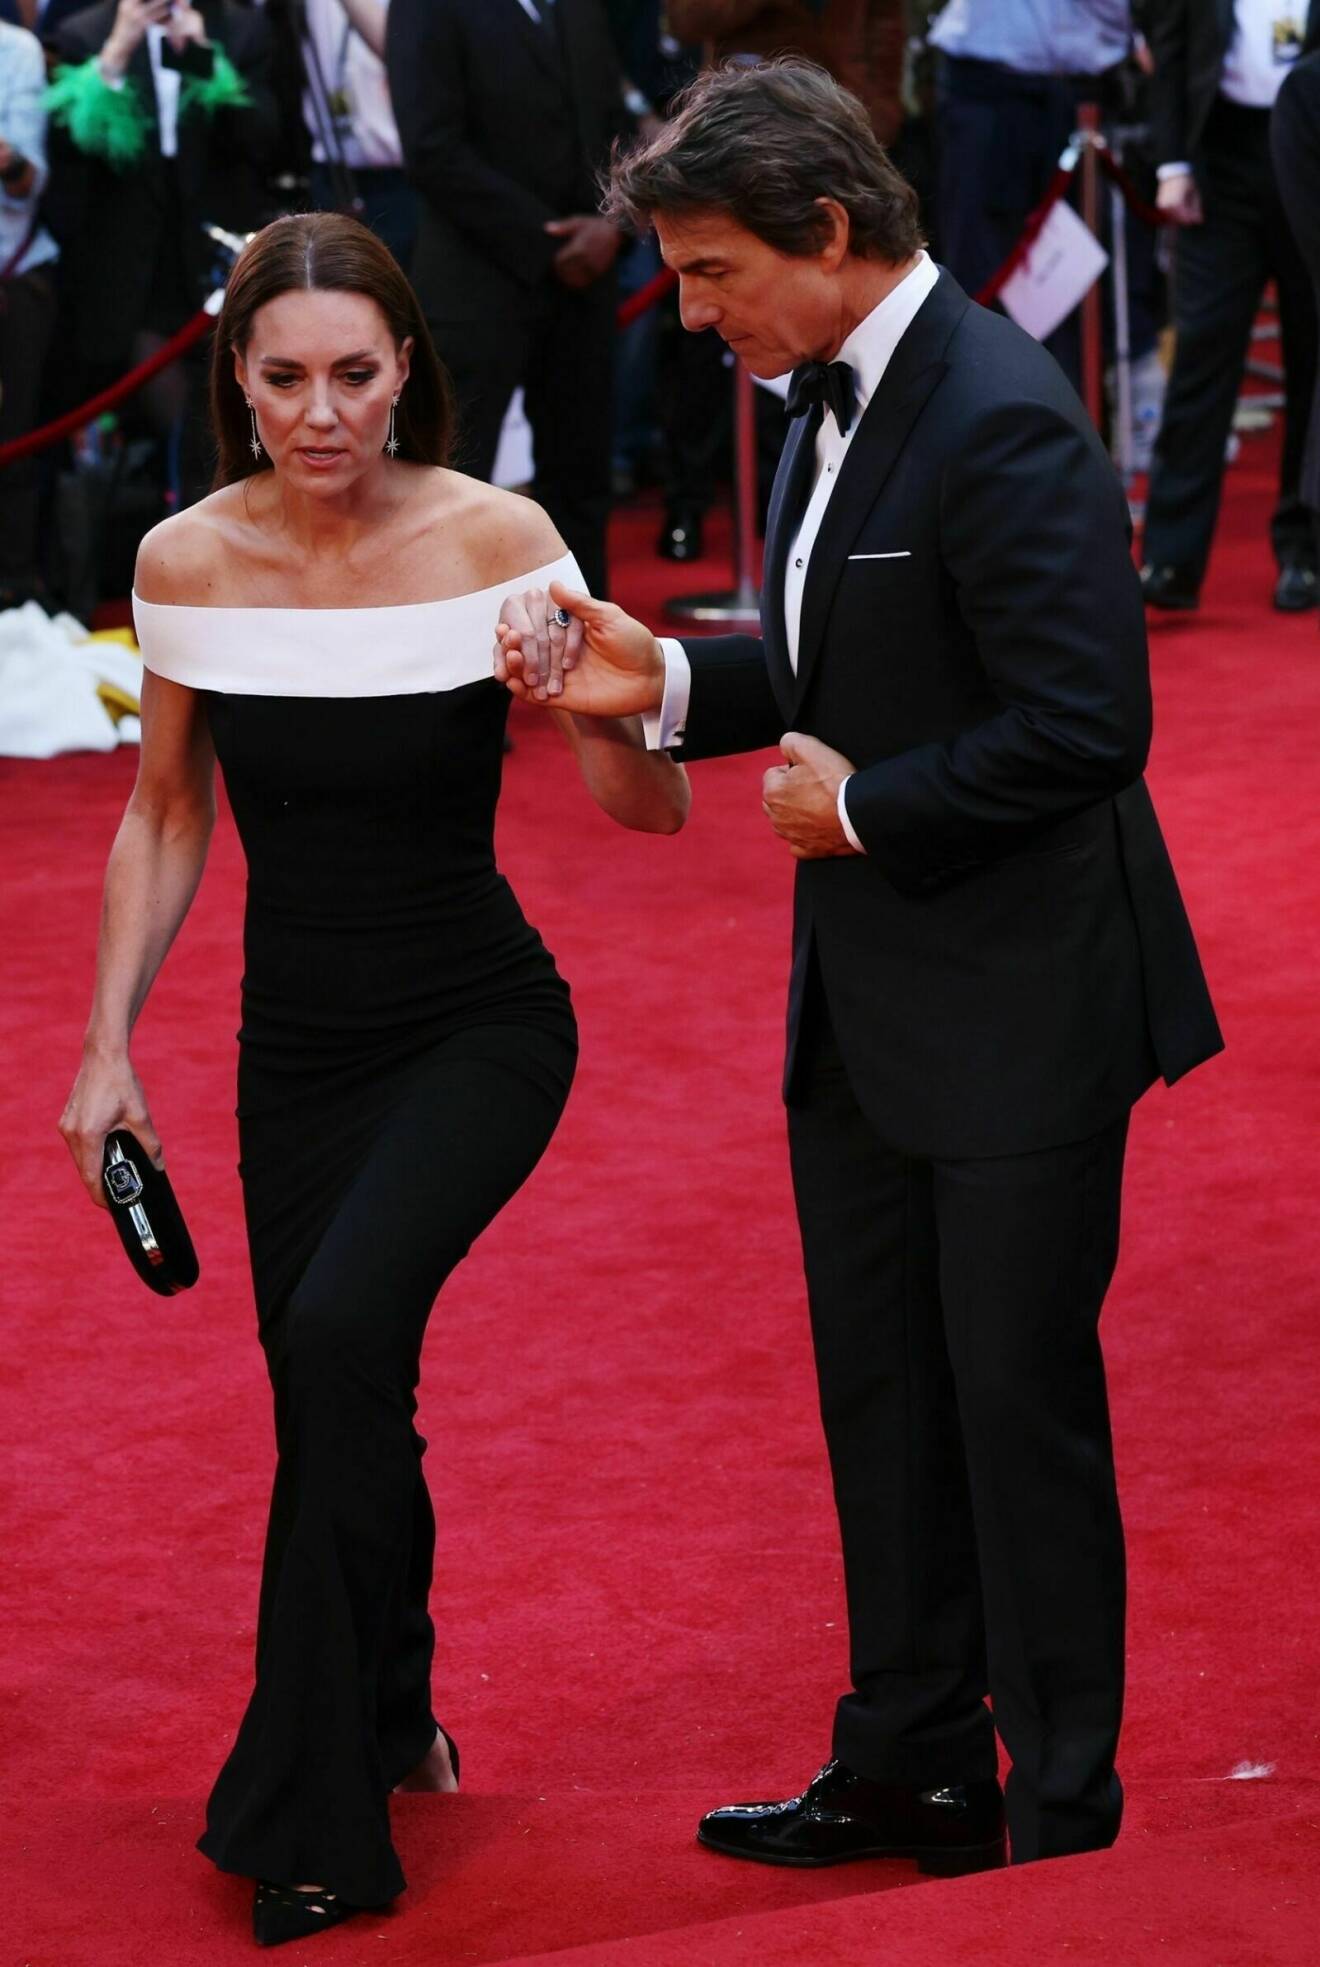 Hertiginnan Kate och Tom Cruise